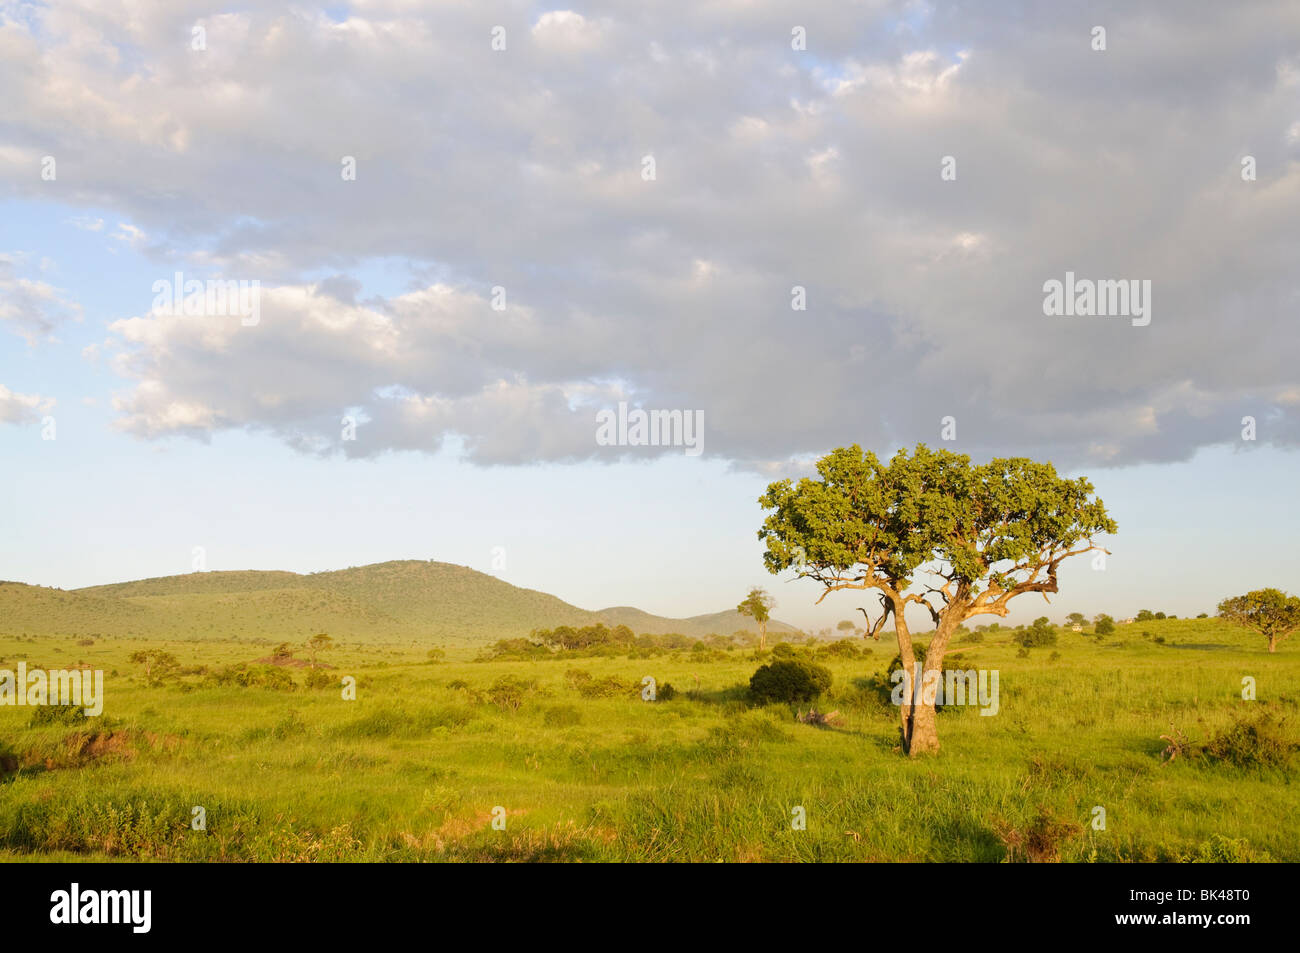 Sabana de pastizales fotografías e imágenes de alta resolución - Alamy